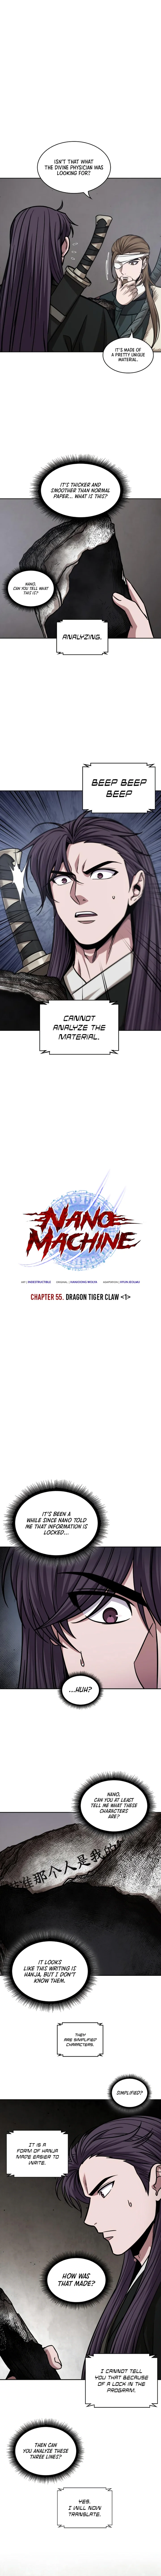 Nano Machine - Chapter 156 Page 2